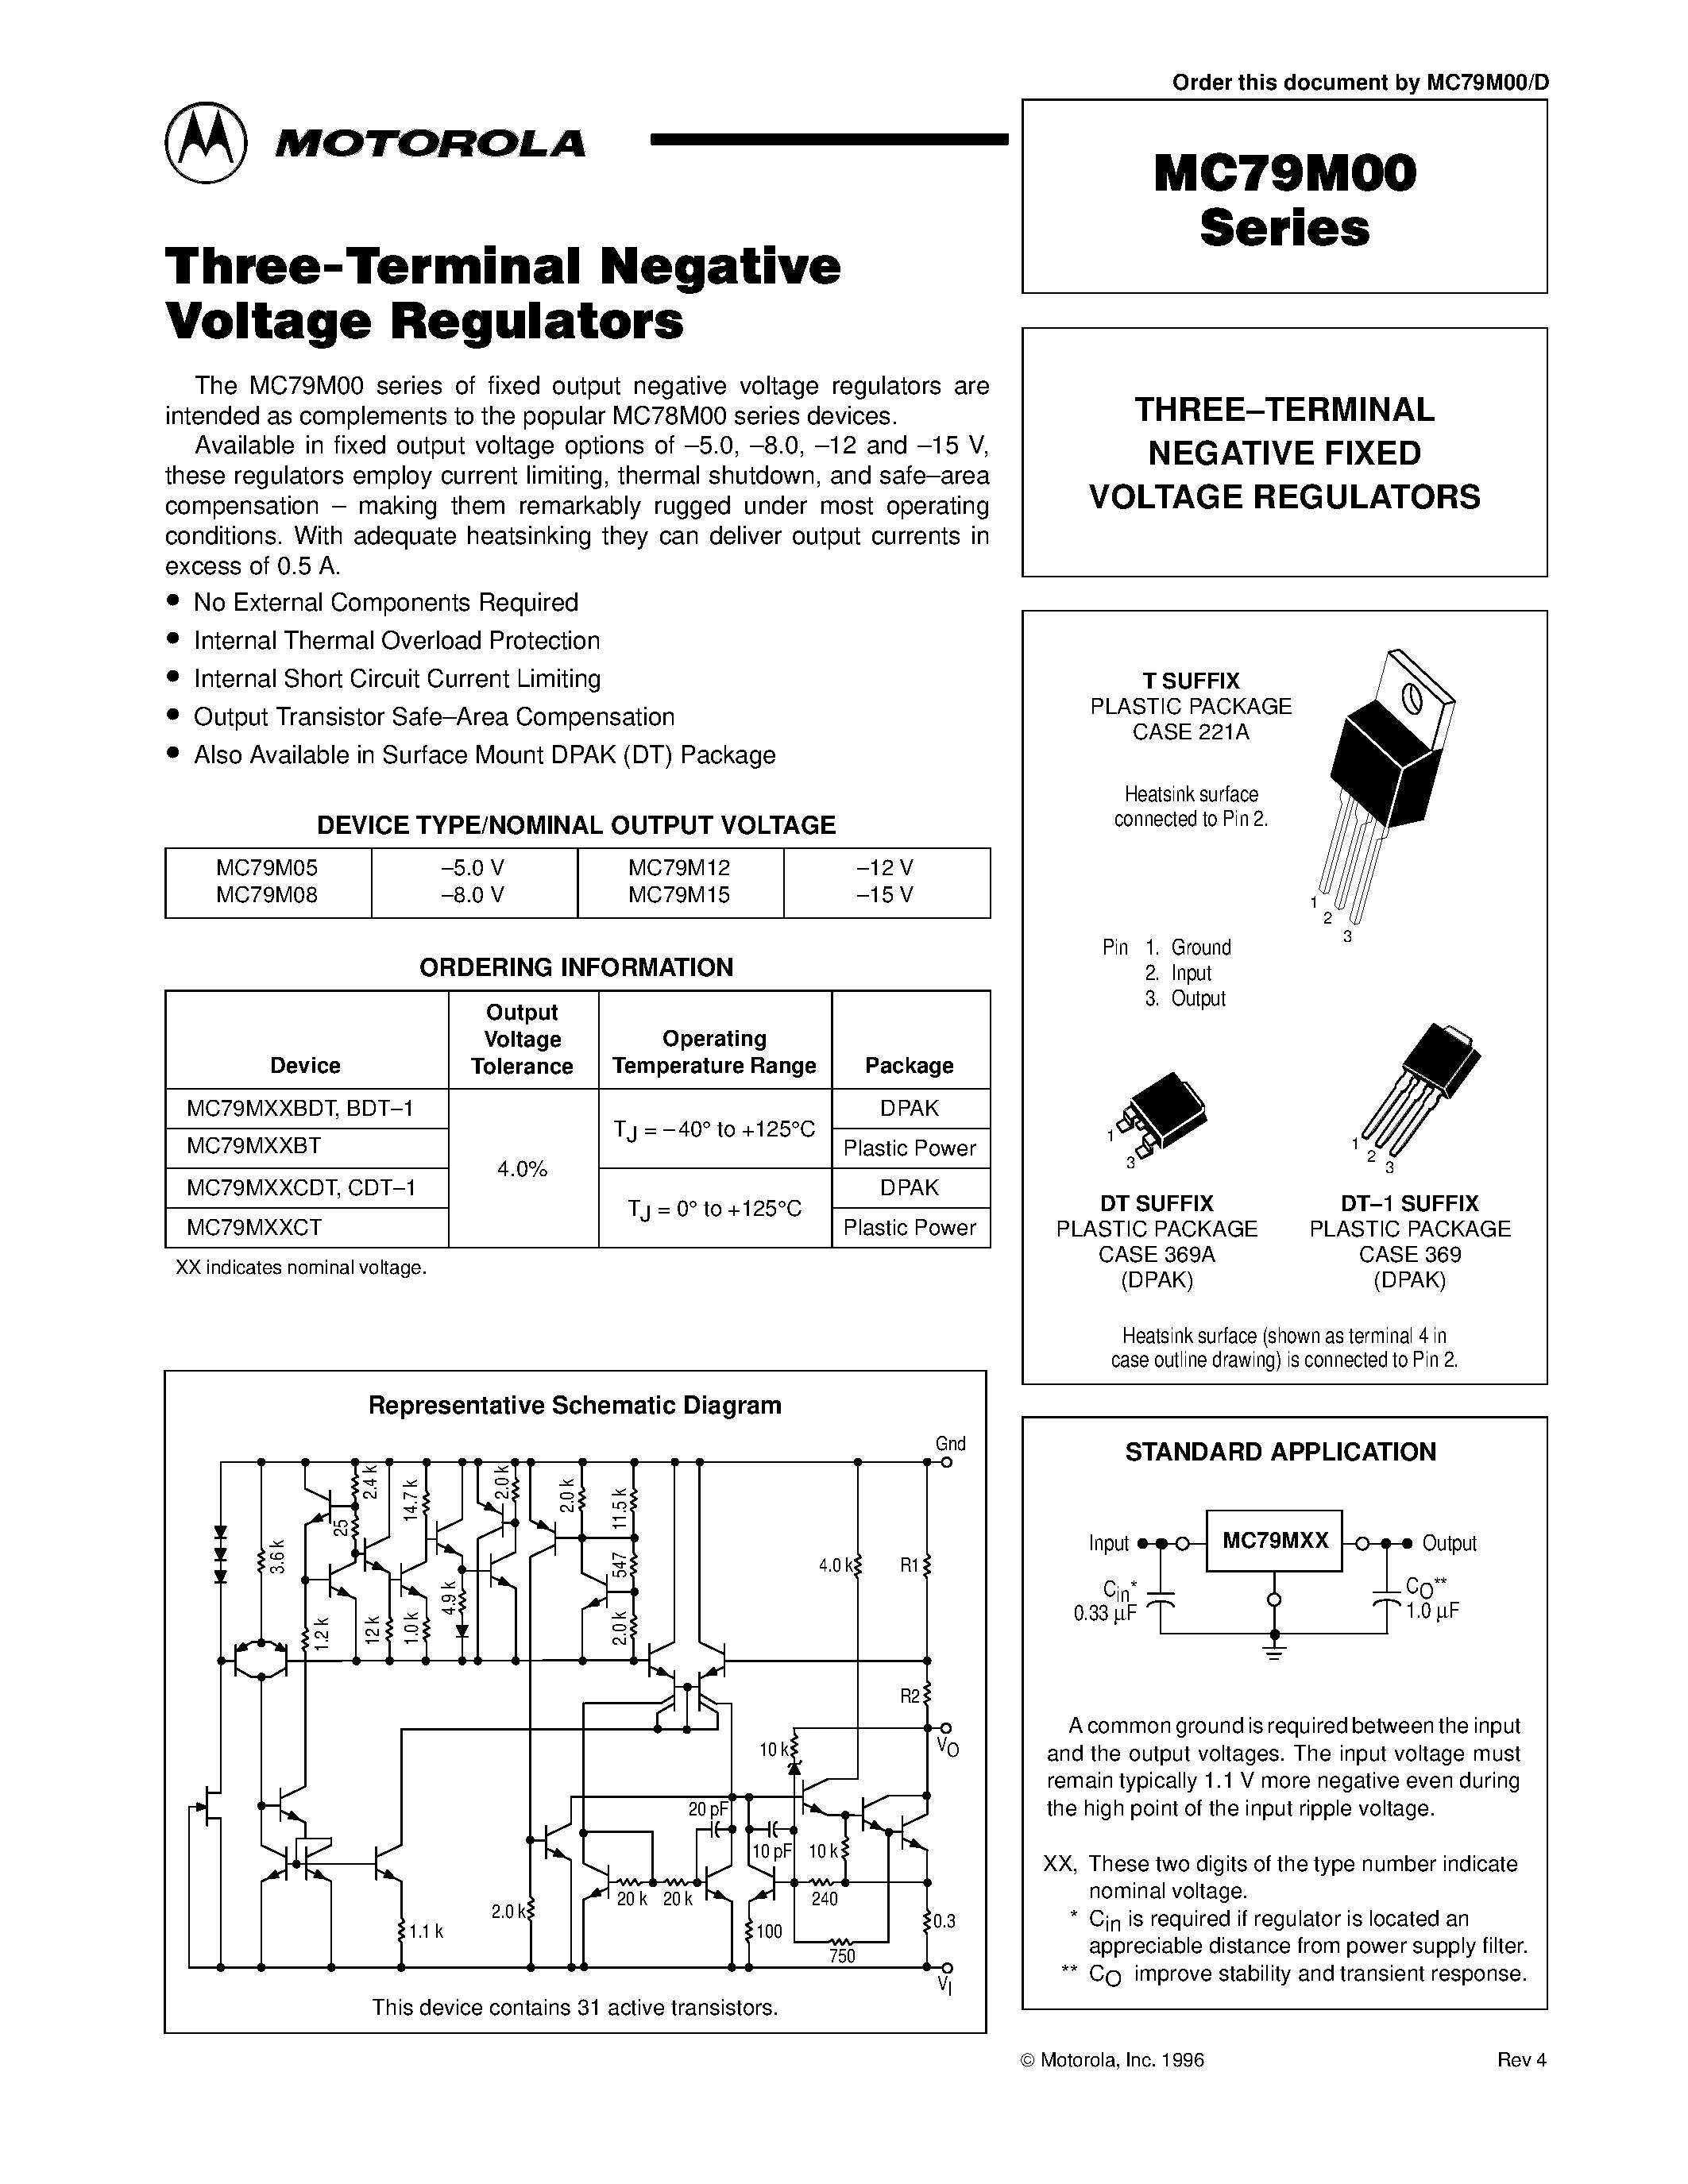 Datasheet MC79M08CDT-1 - THREE-TERMINAL NEGATIVE FIXED VOLTAGE REGULATORS page 1